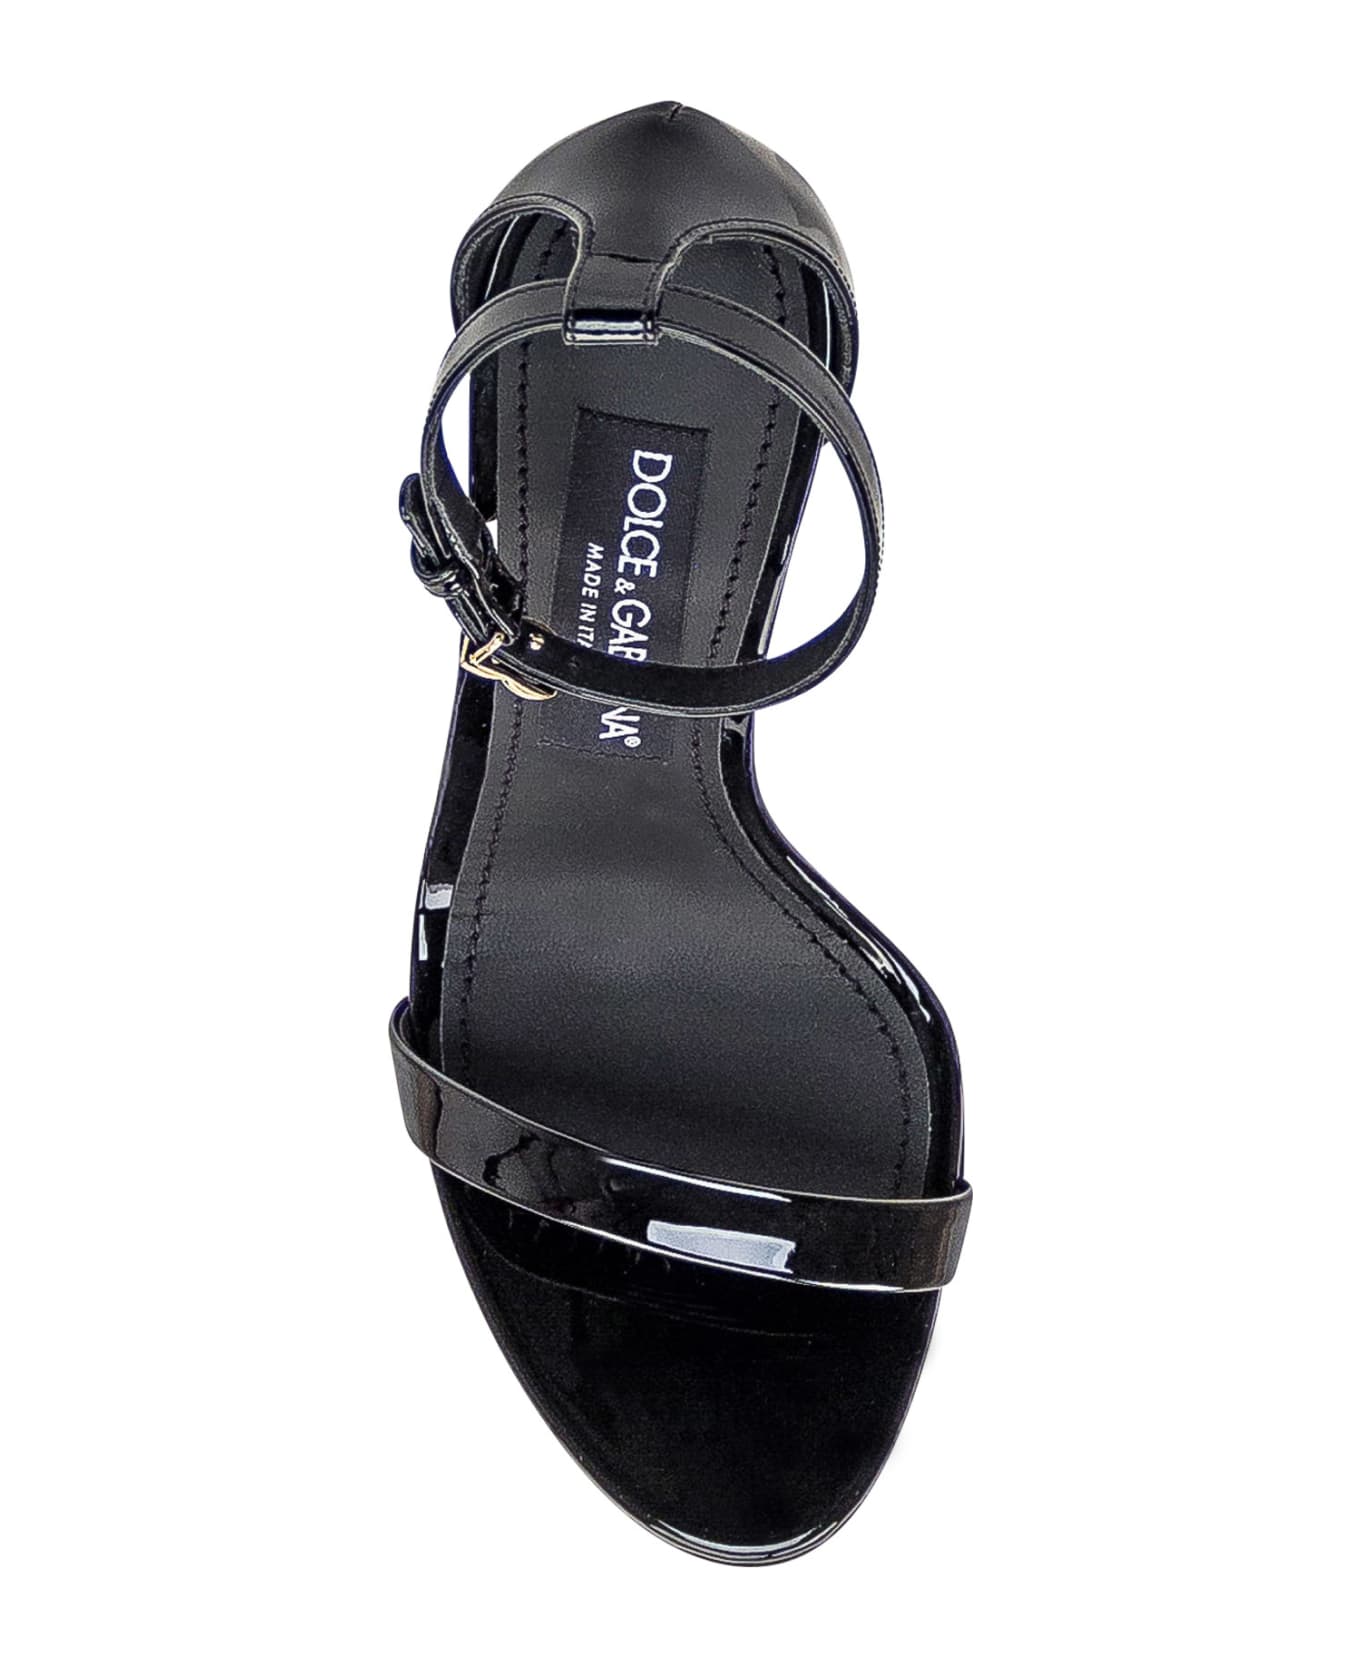 Dolce & Gabbana Leather Sandal - NERO ORO (Black)